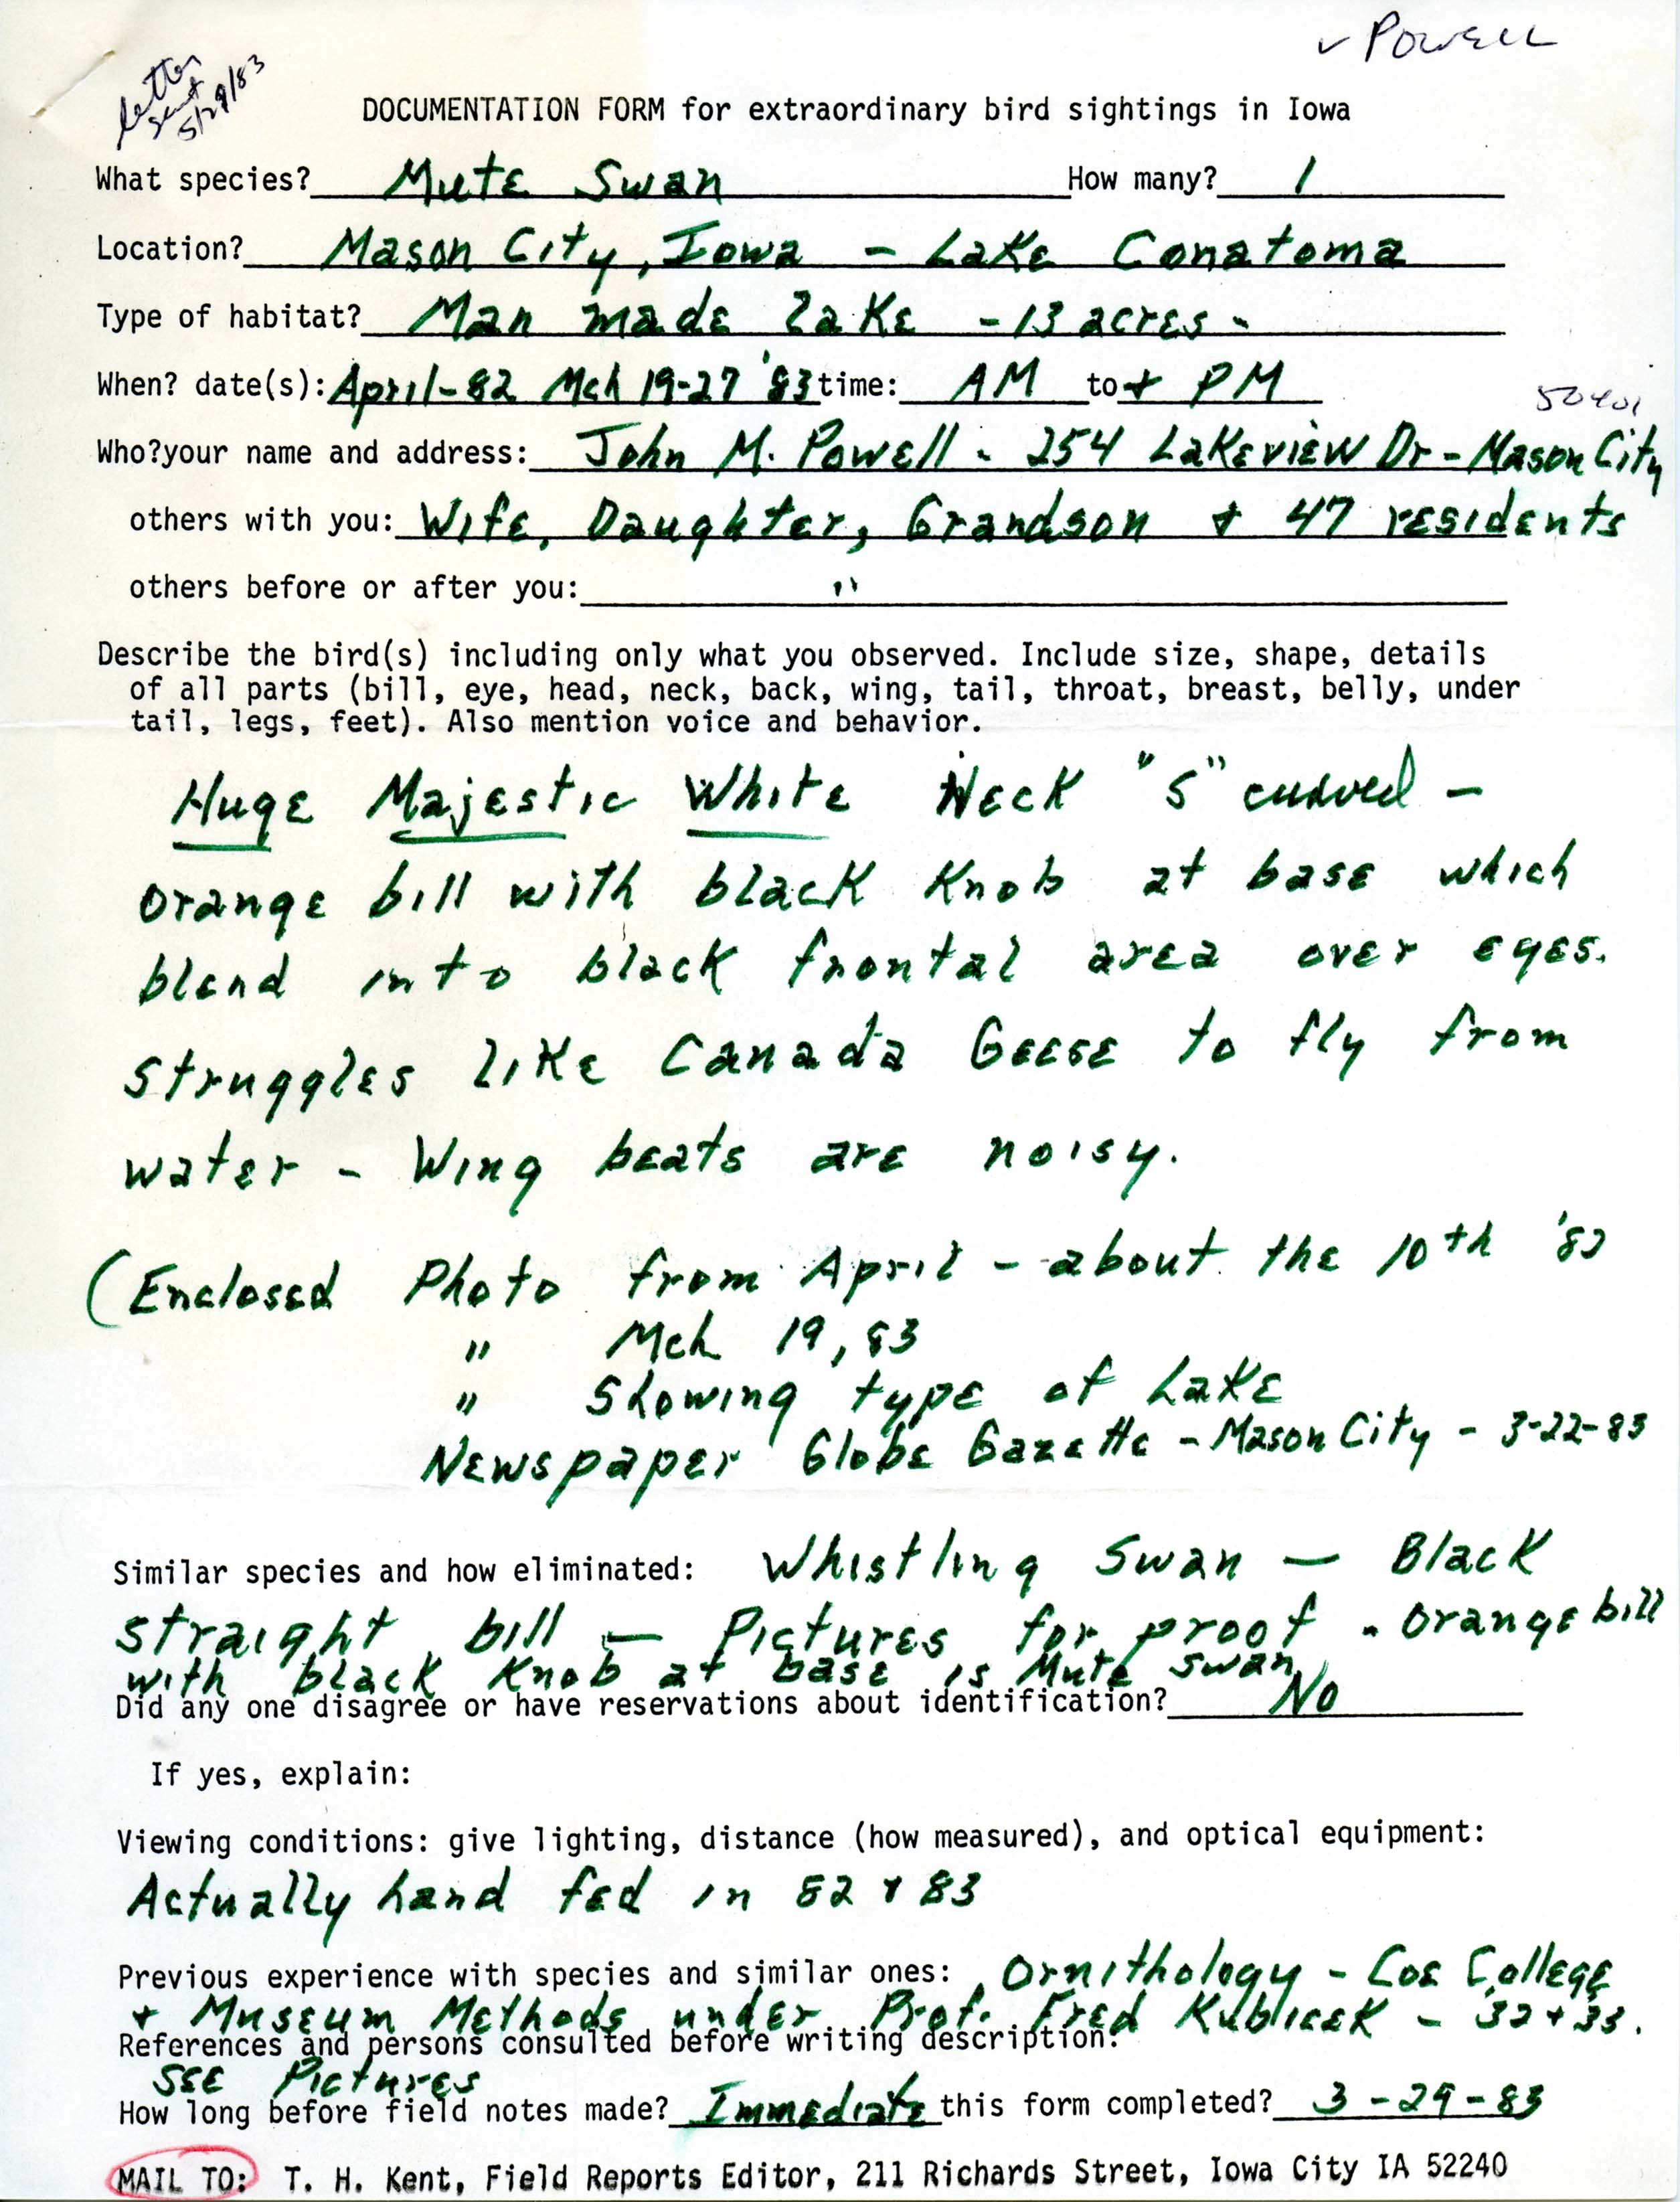 Rare bird documentation form for Mute Swan at Mason City, 1982